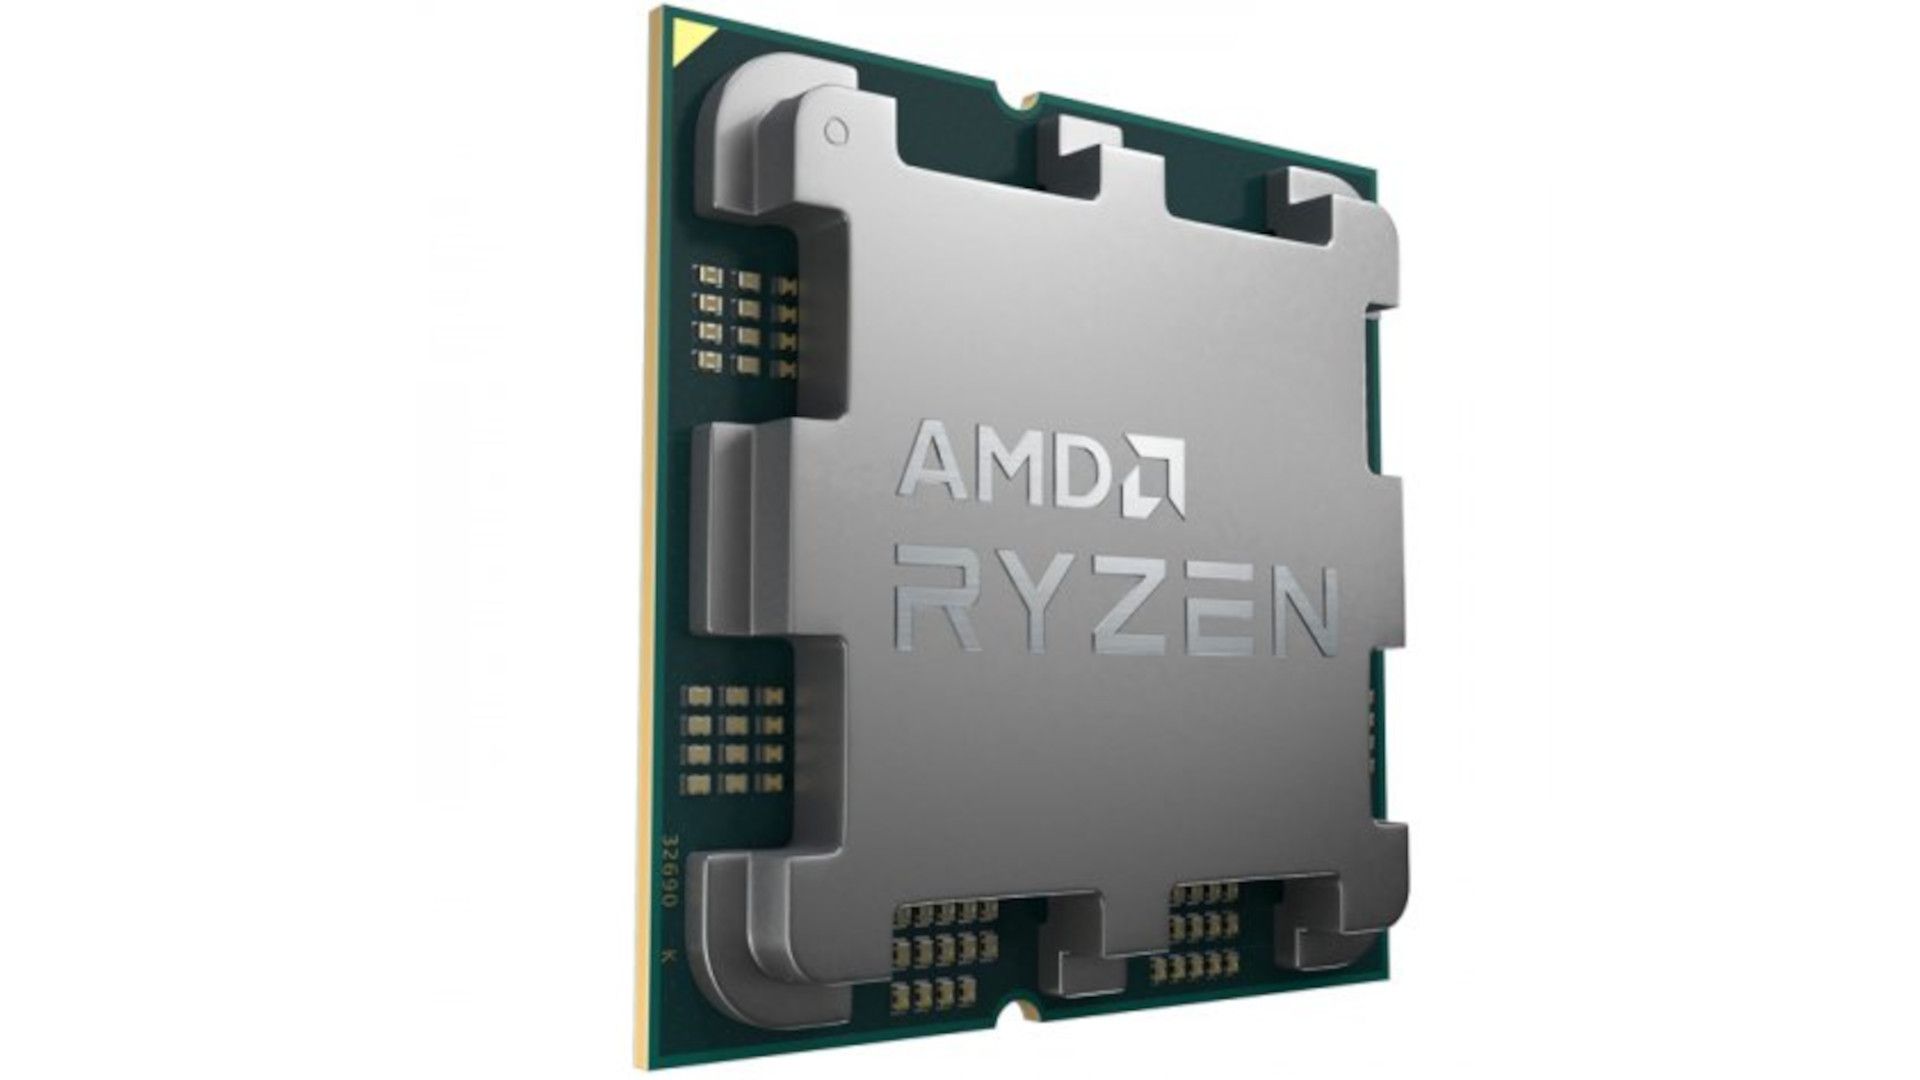 AMD Ryzen 7 7700X 3